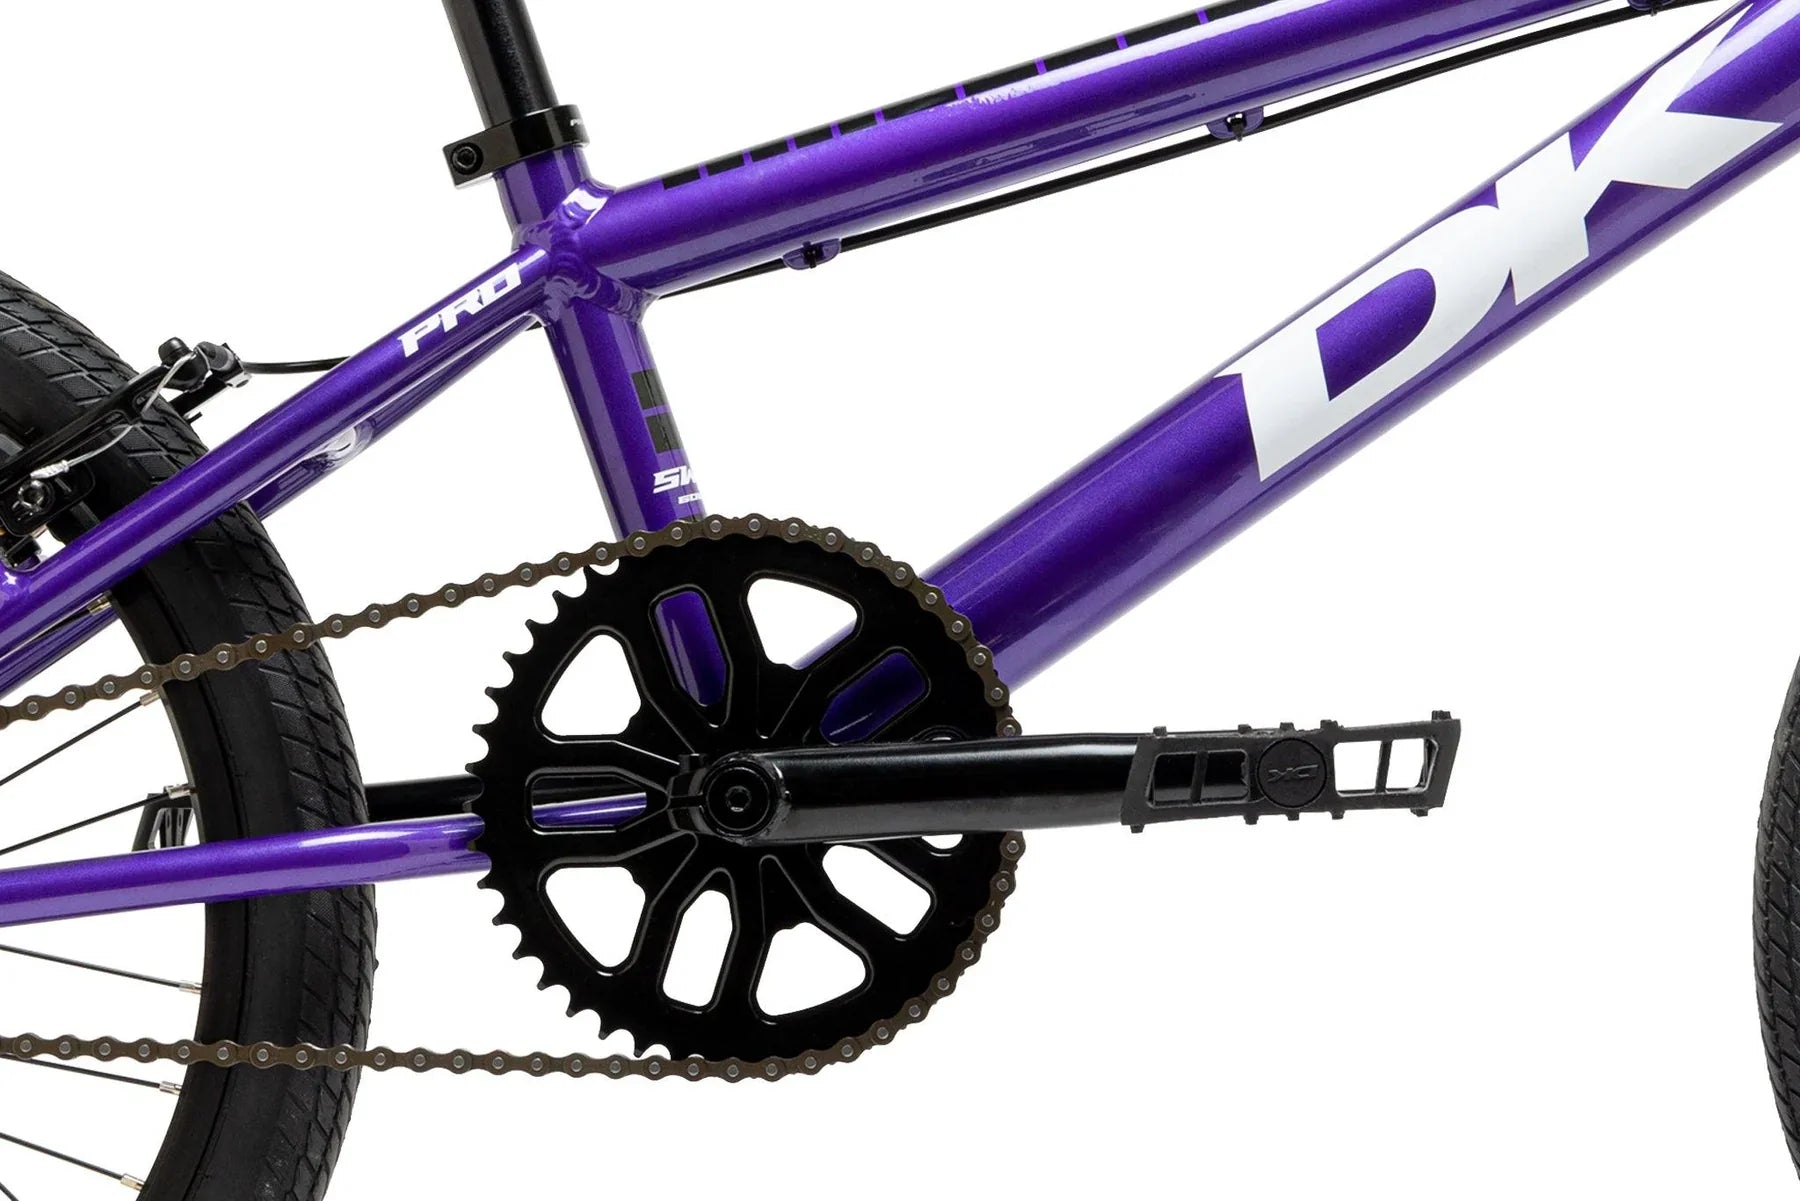 Bicicleta DK Swift Purple Expert